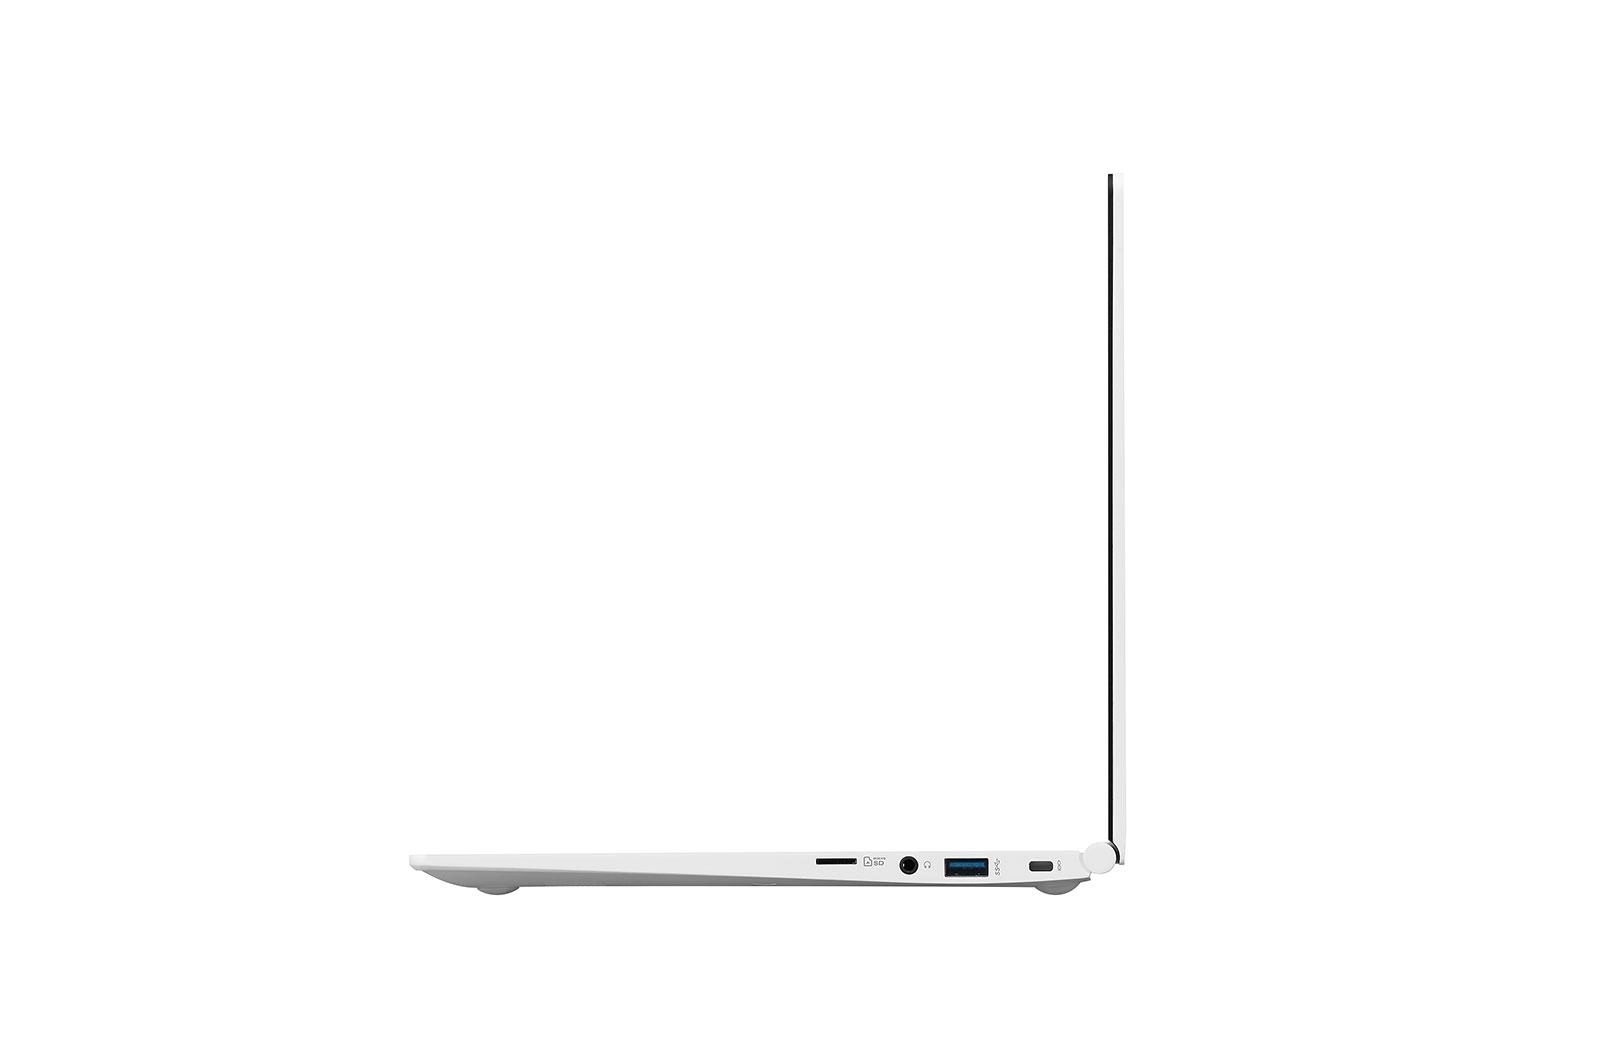 LG 14Z990-U.AAW5U1 laptop image